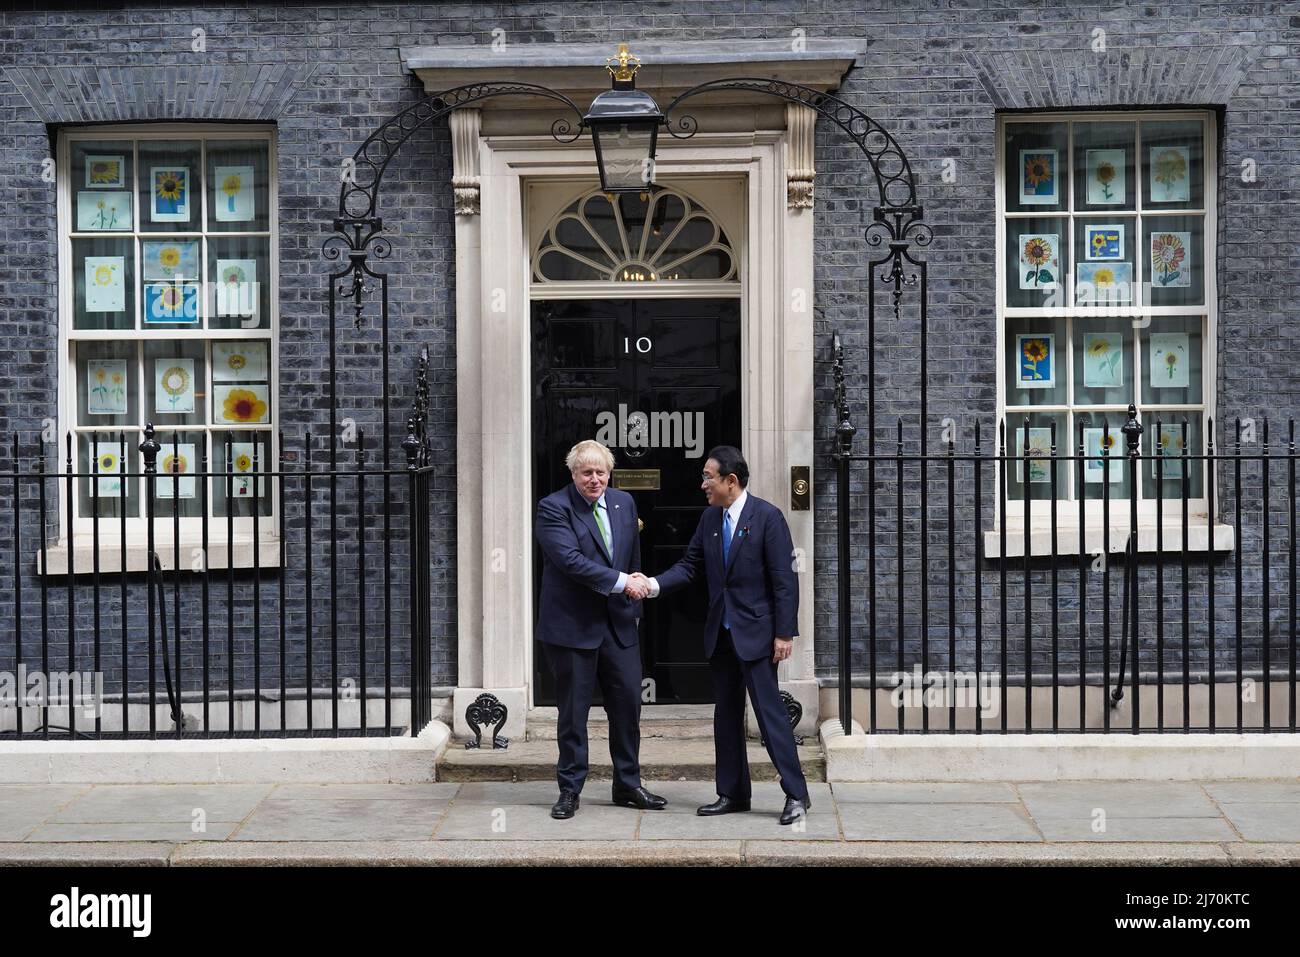 Premierminister Boris Johnson begrüßt den japanischen Premierminister Fumio Kishida in der Downing Street 10 in London. Bilddatum: Donnerstag, 5. Mai 2022. Stockfoto